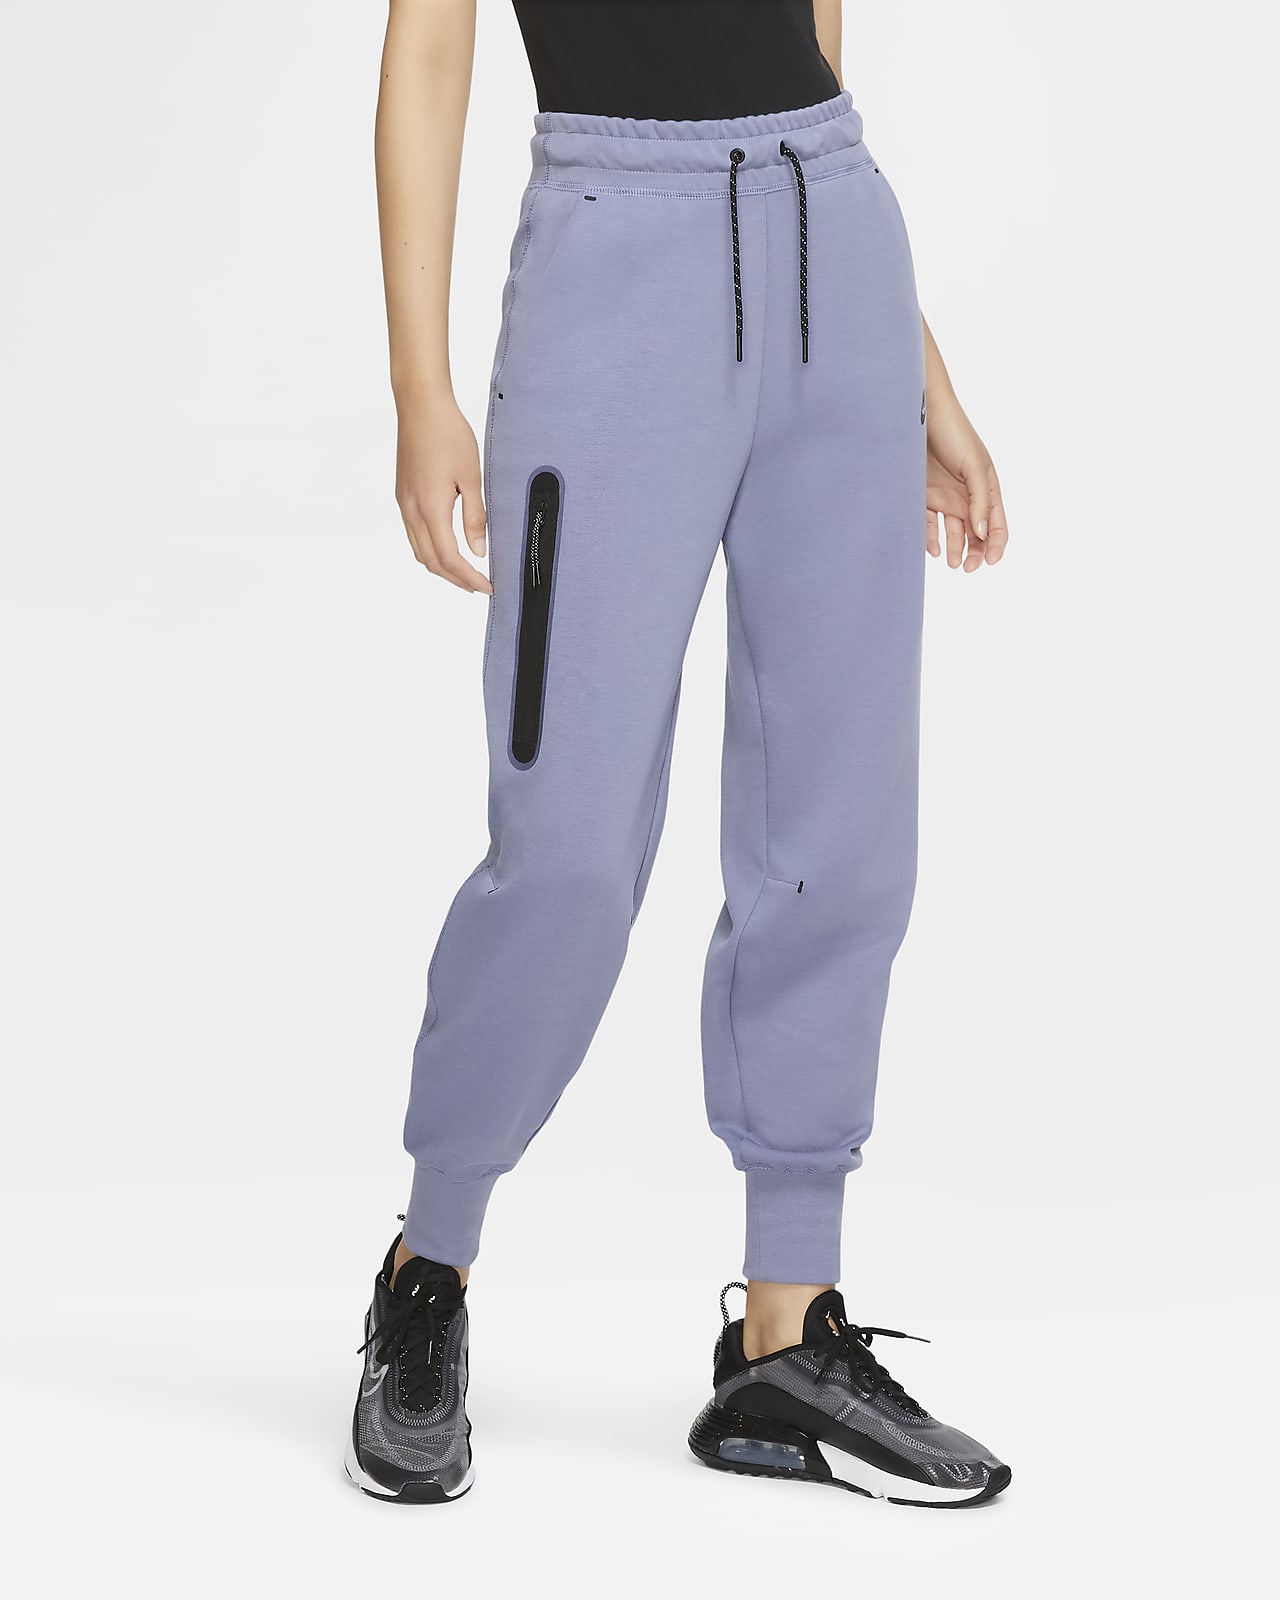 nike tech fleece pants women's grey